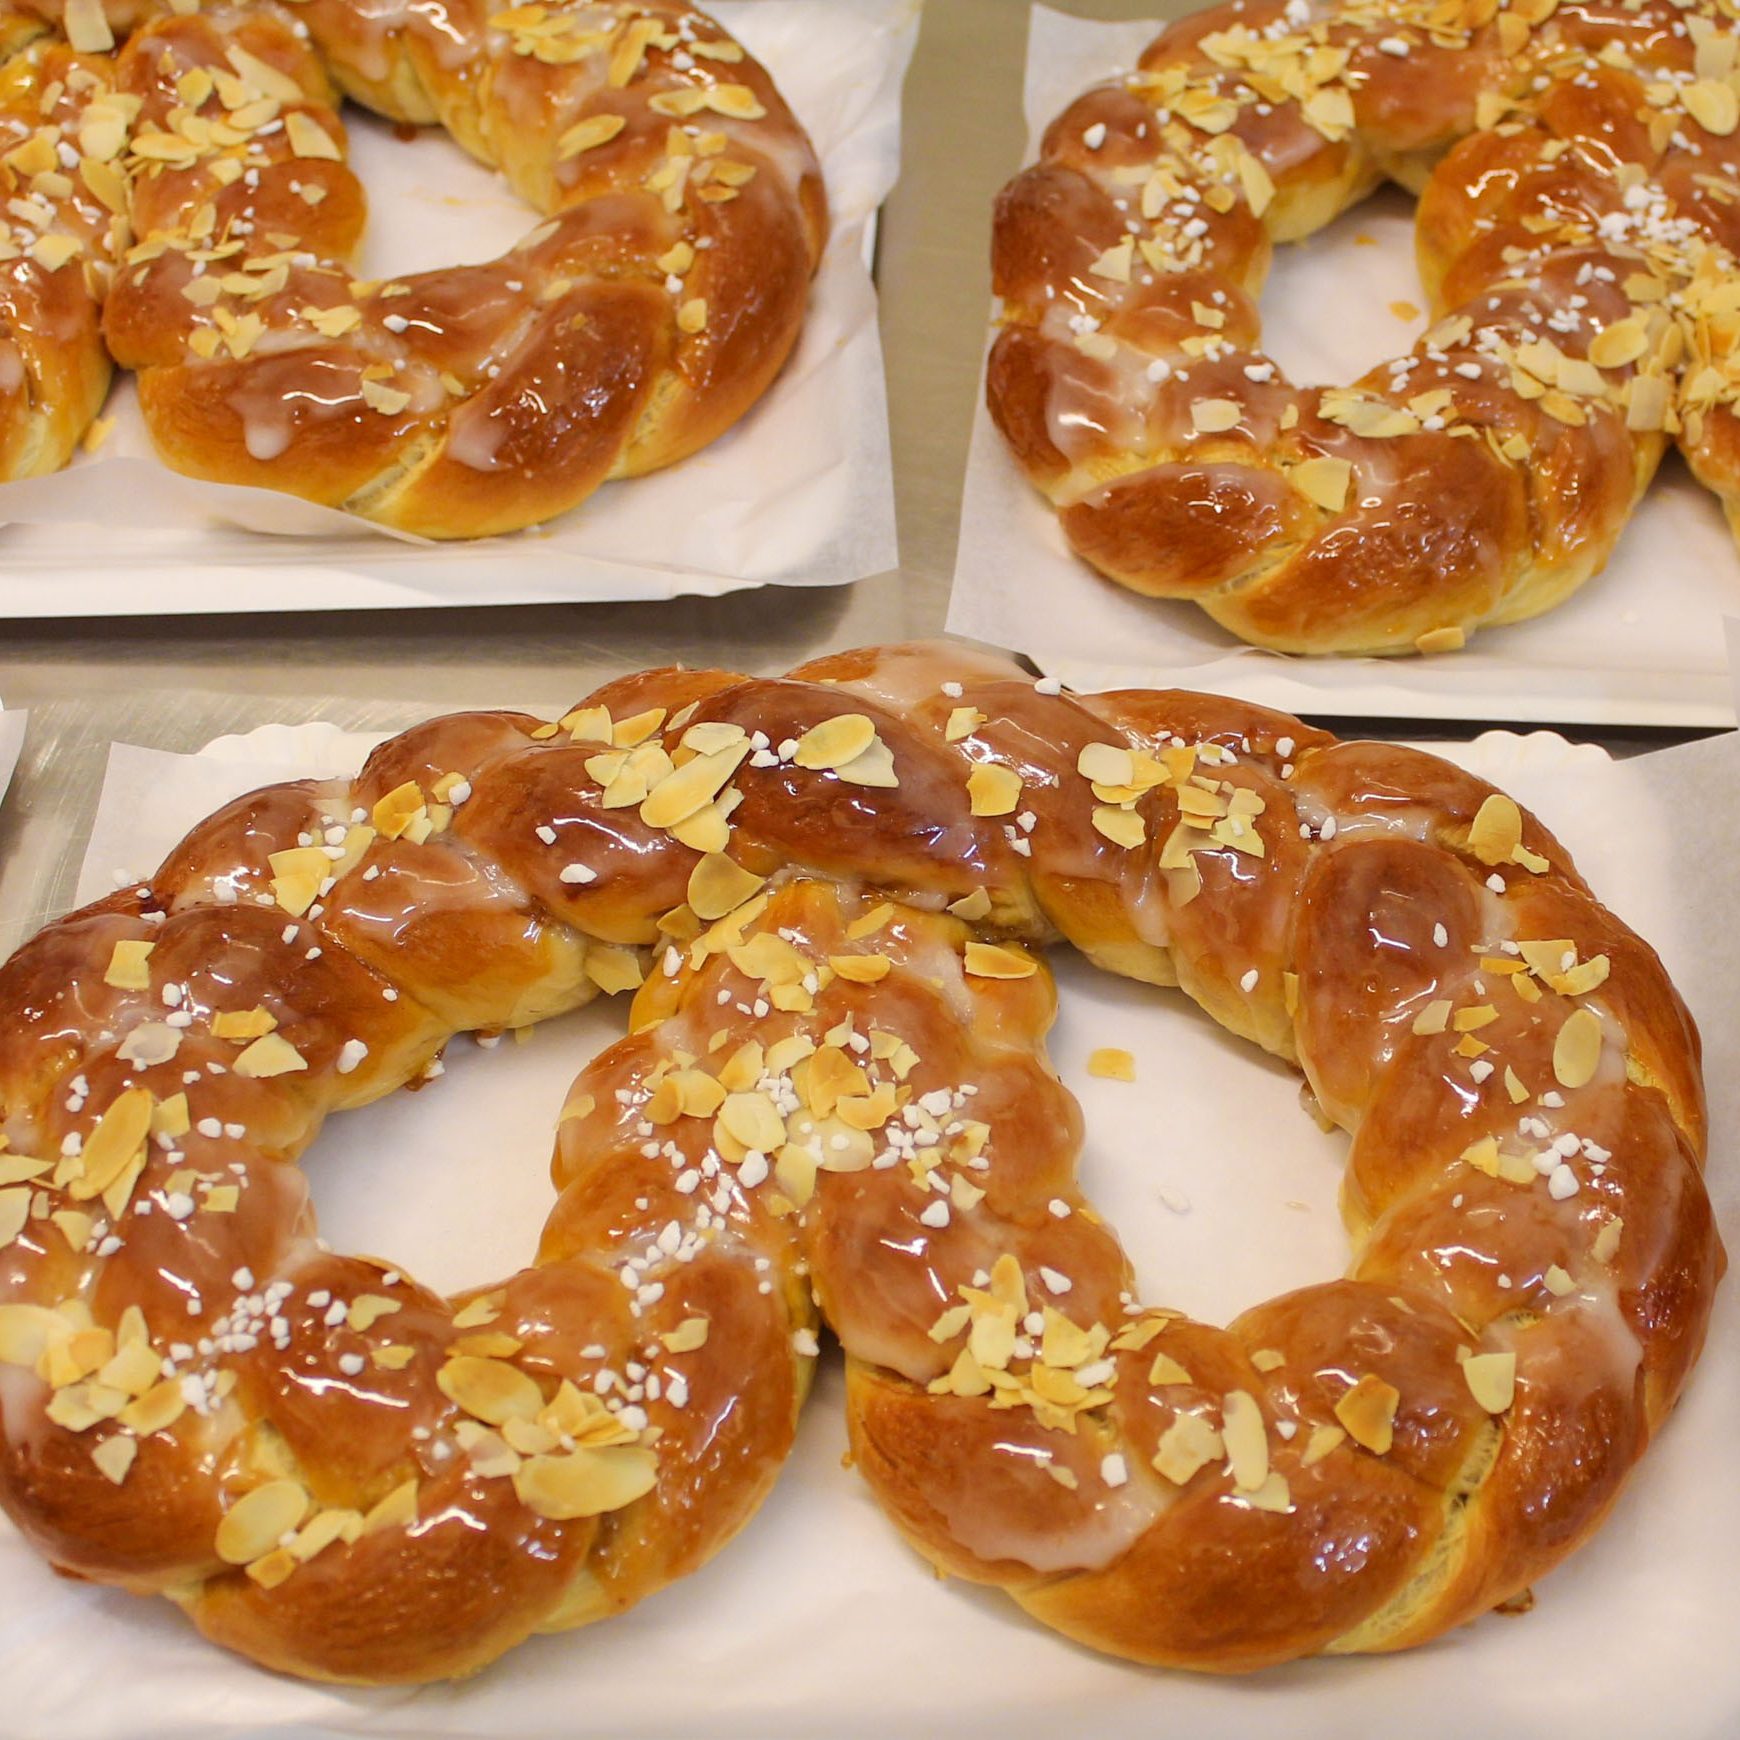 New Year's pretzel made from yeast dough - Cafe Kleimann